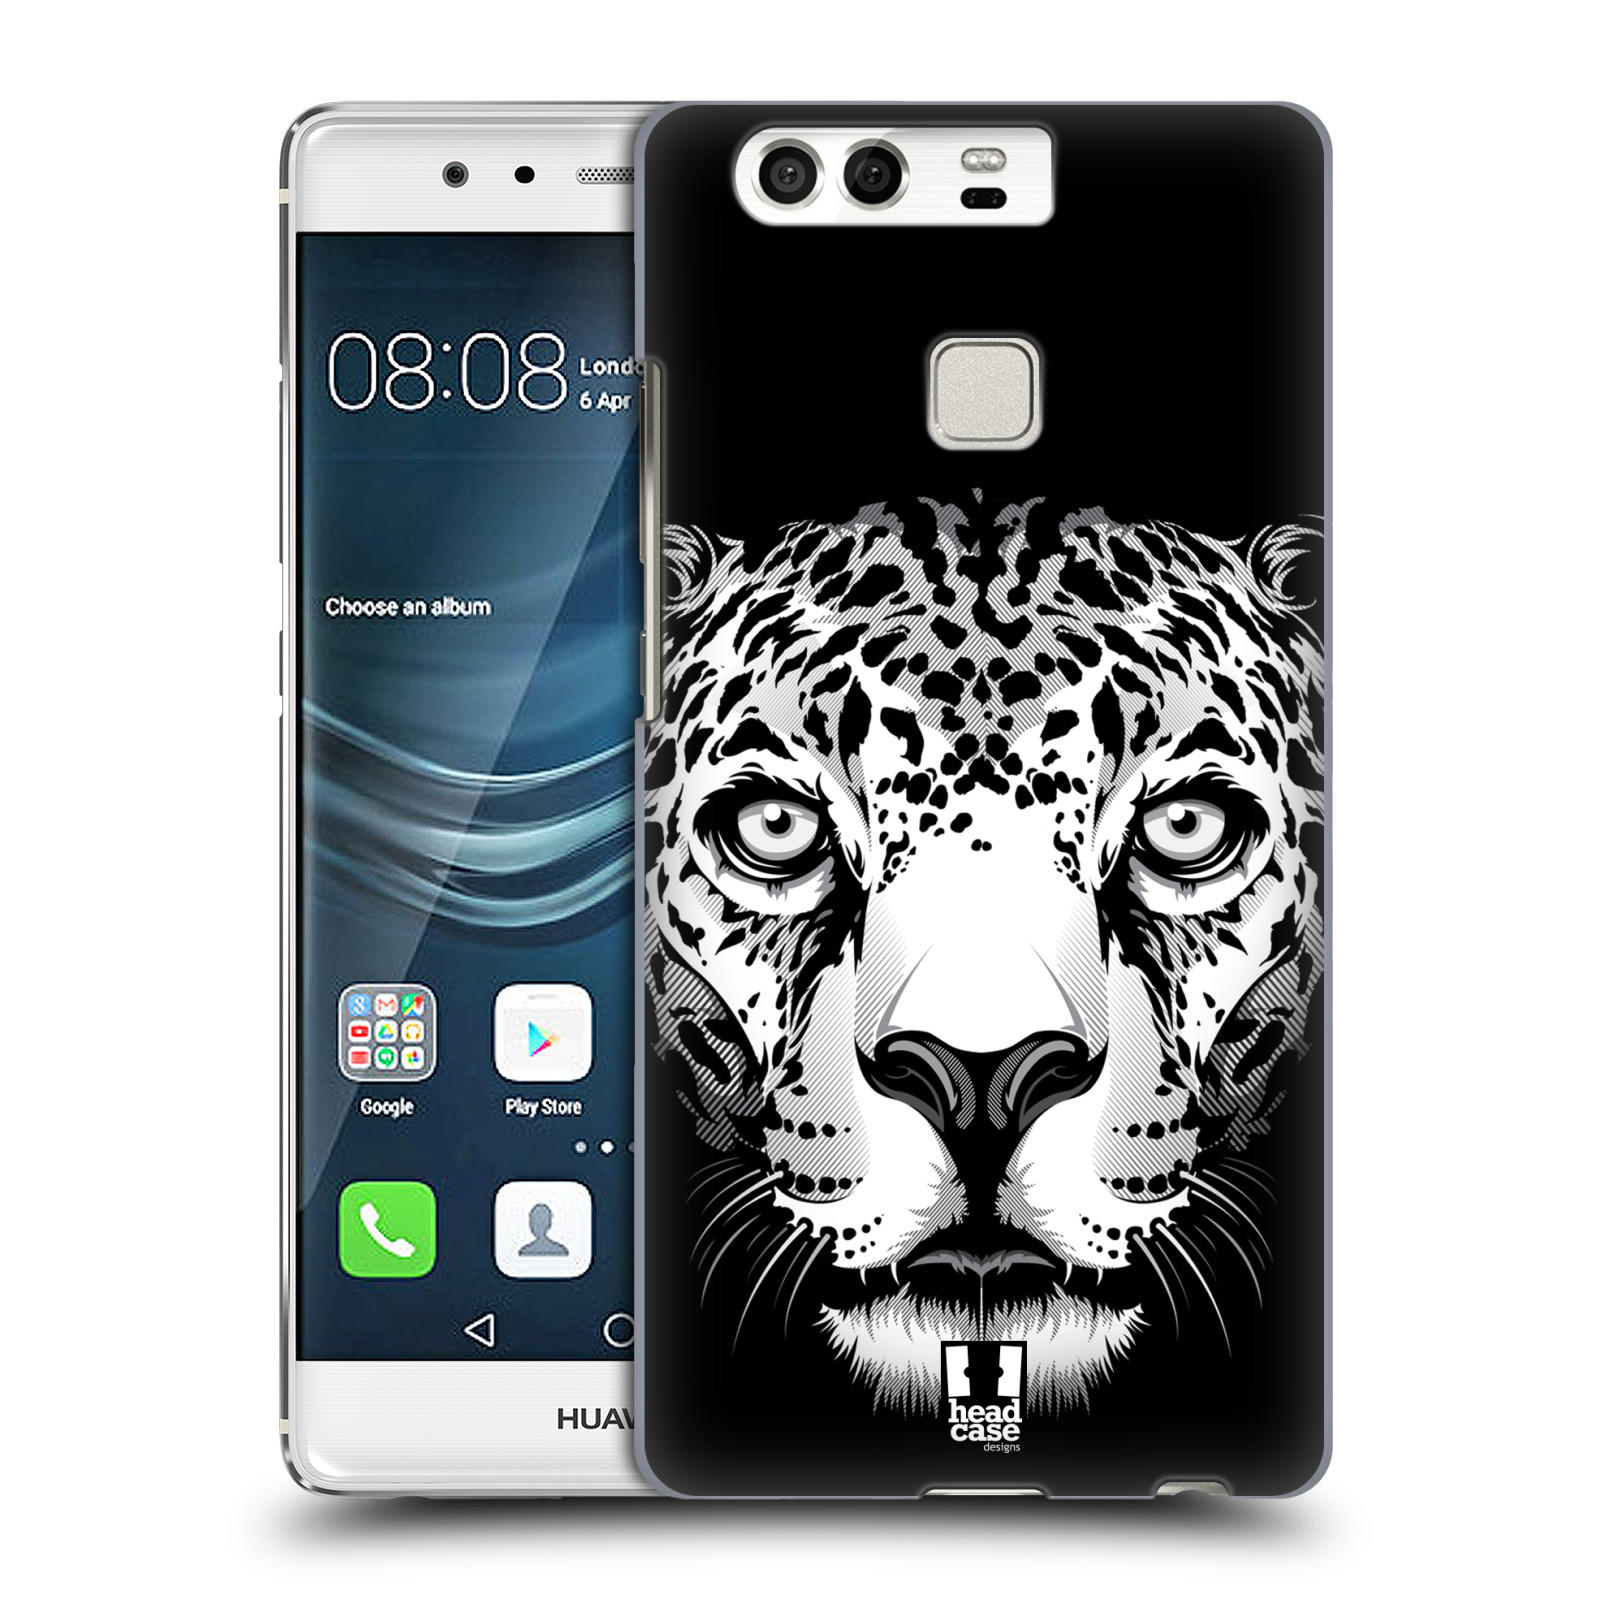 HEAD CASE plastový obal na mobil Huawei P9 / P9 DUAL SIM vzor Zvíře kreslená tvář leopard